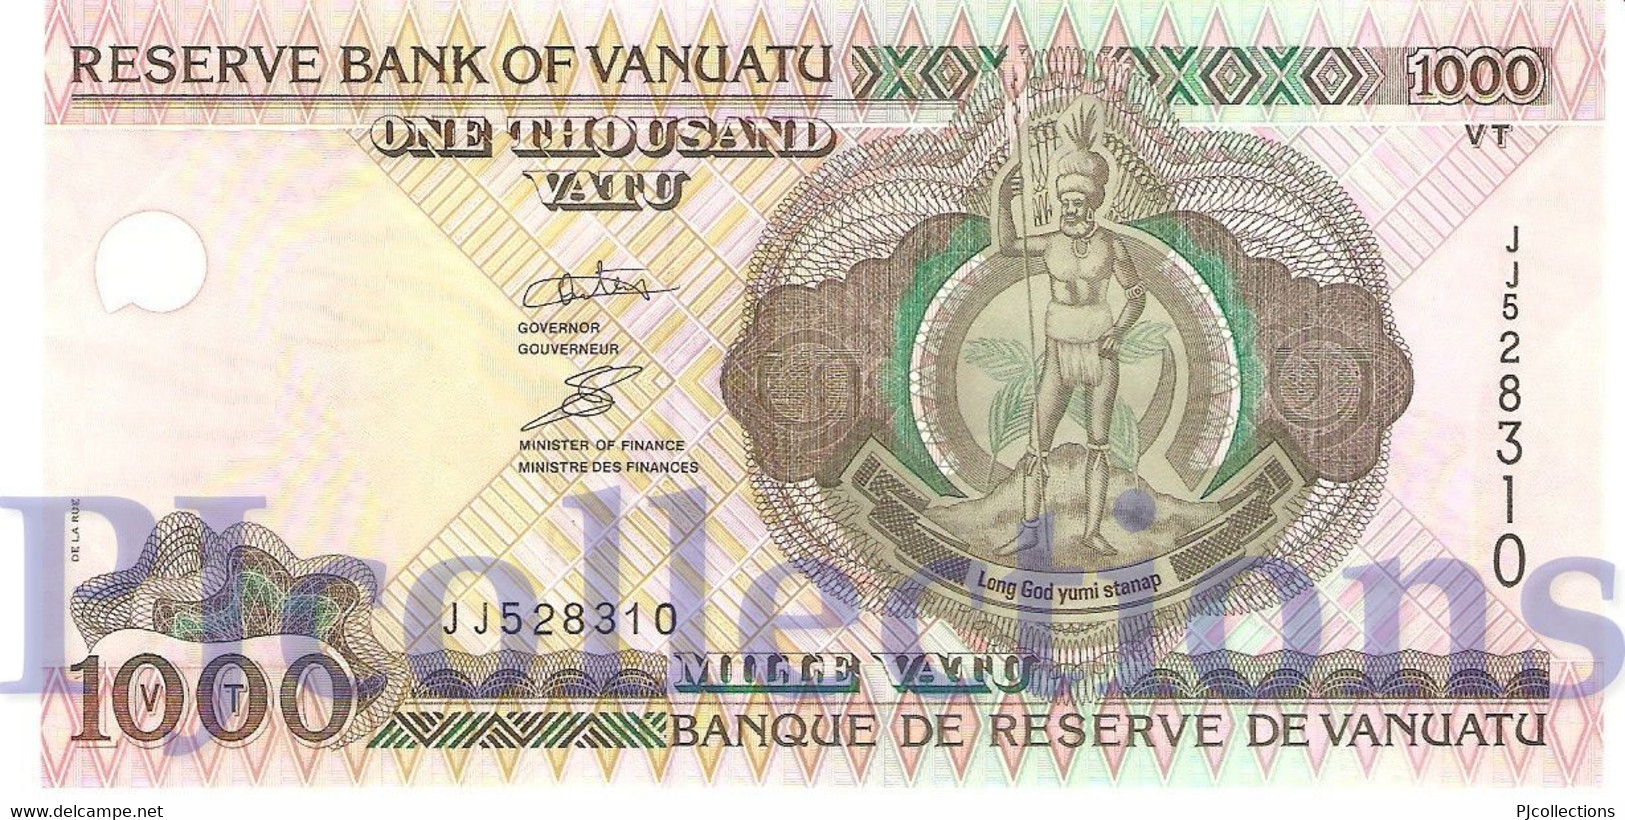 VANUATU 1000 VATU 2002 PICK 10c UNC PREFIX "JJ" - Vanuatu